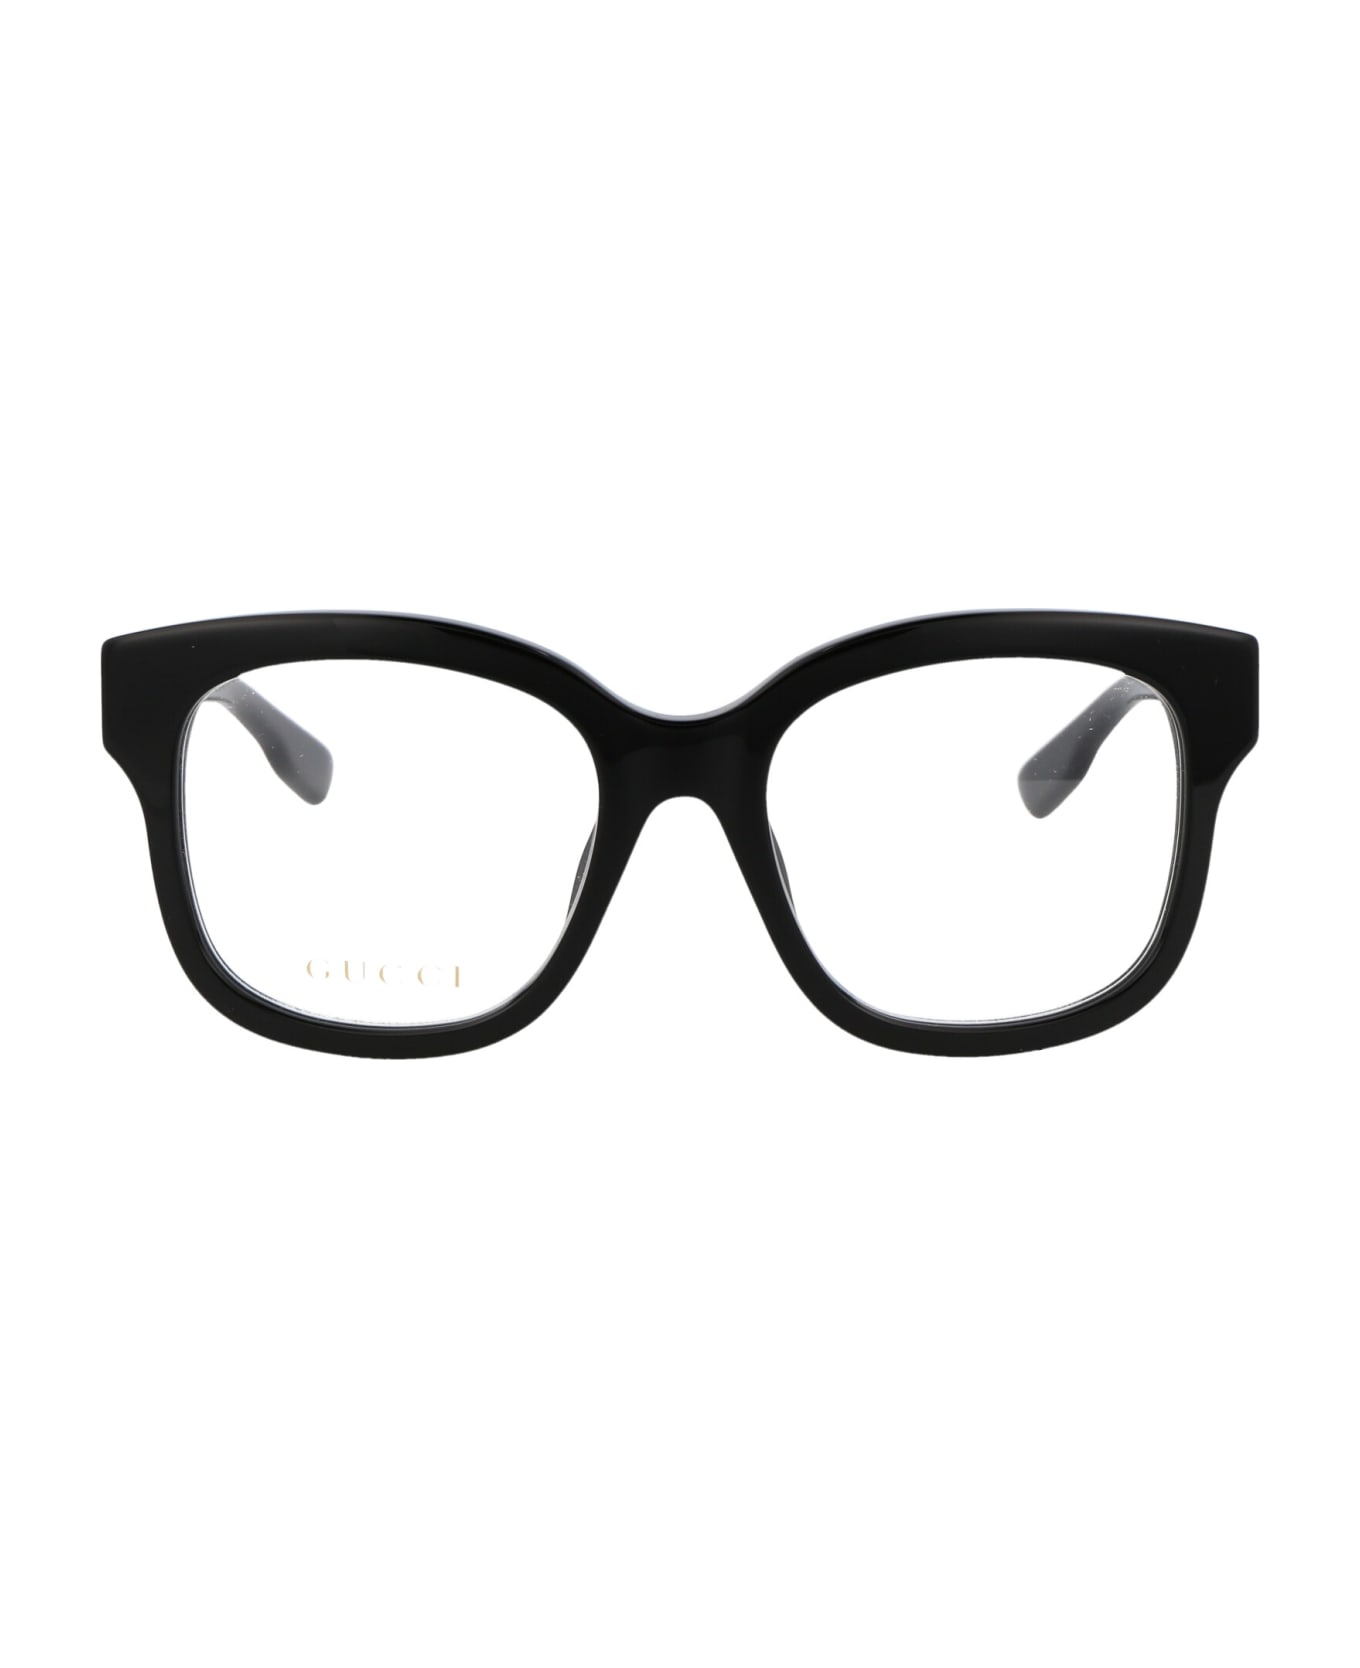 Gucci Eyewear Gg1155o Glasses - 001 BLACK BLACK TRANSPARENT アイウェア